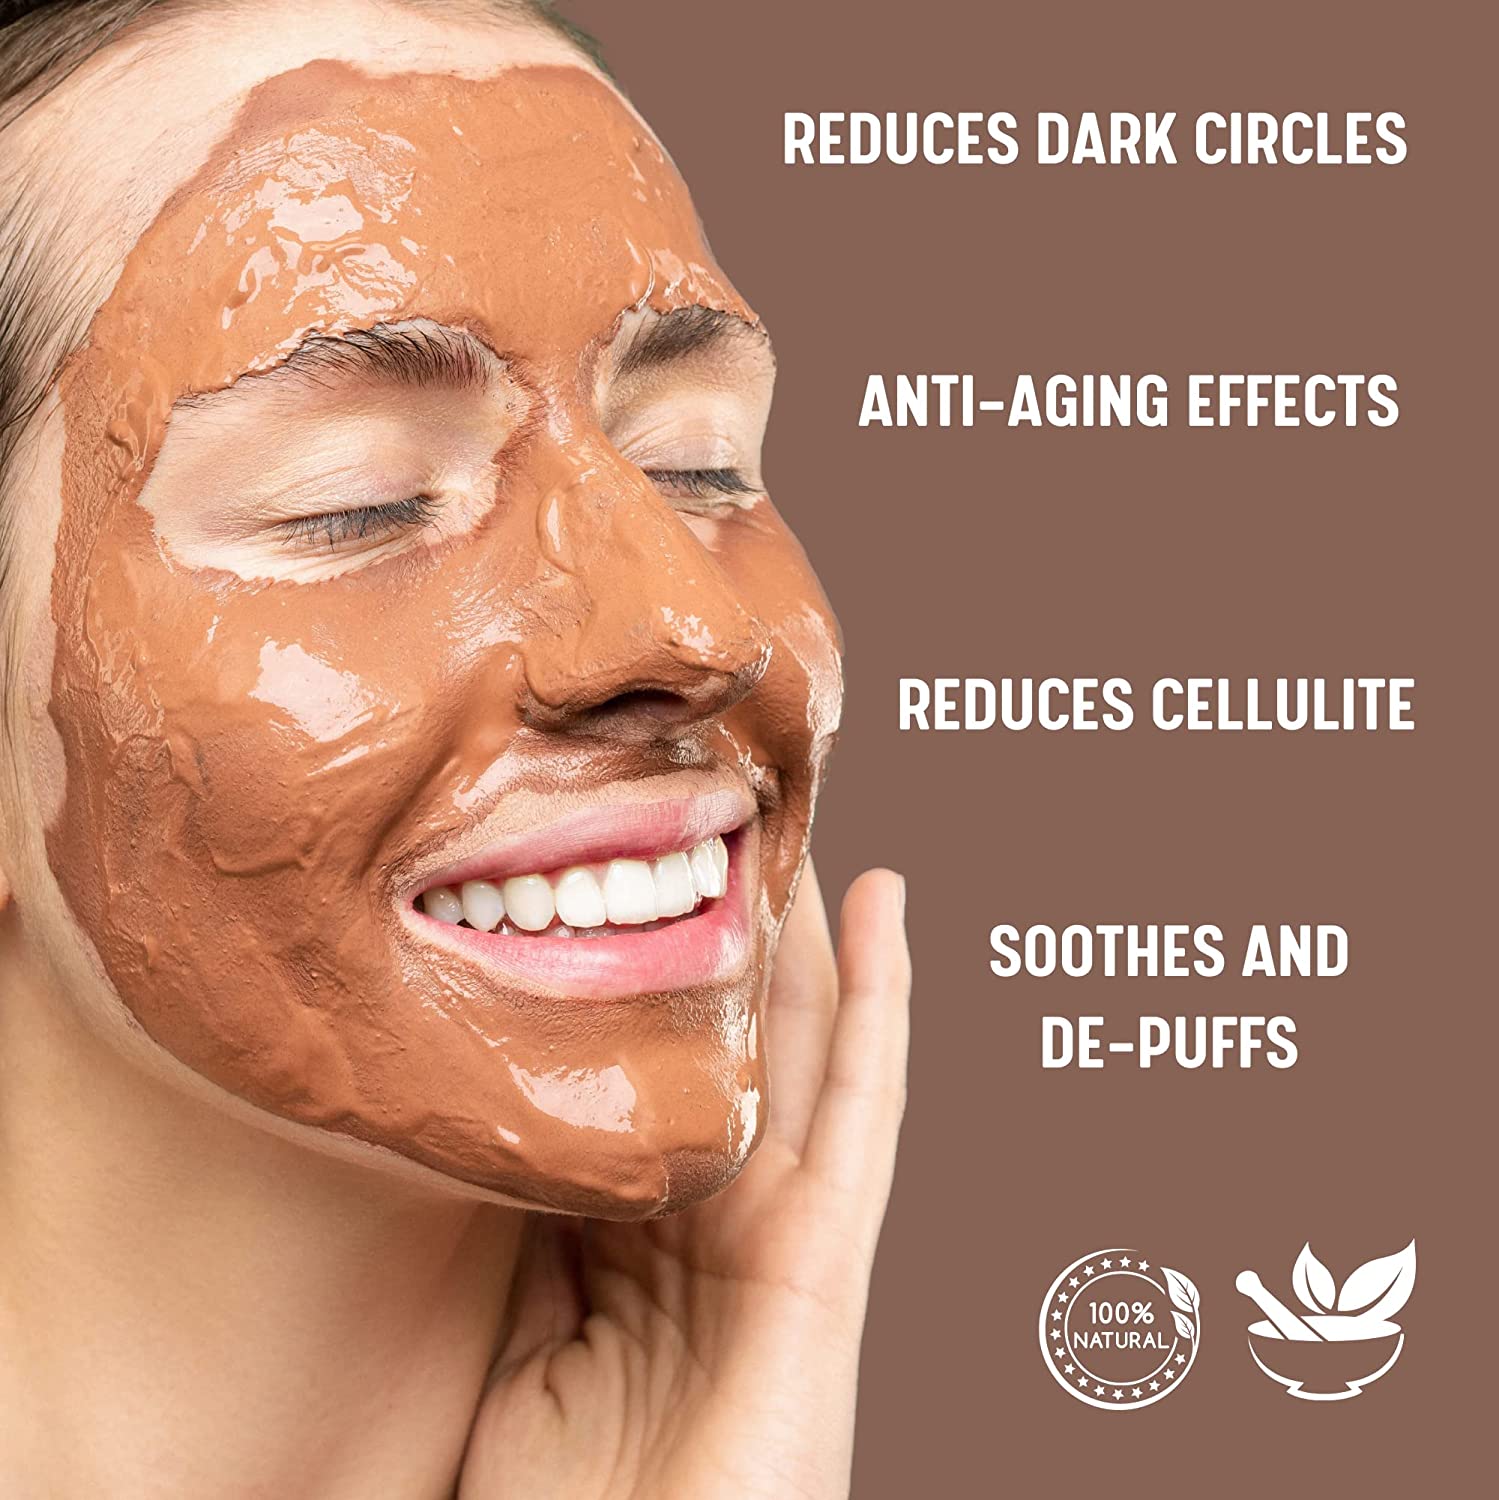 Havintha Coffee Face Scrub - 100g | With Neem, Jojoba Oil, Shea and Cocoa Butter | Reduces Dark Circles, Dead Skin Remover | Face Scrub For Men &amp; Women